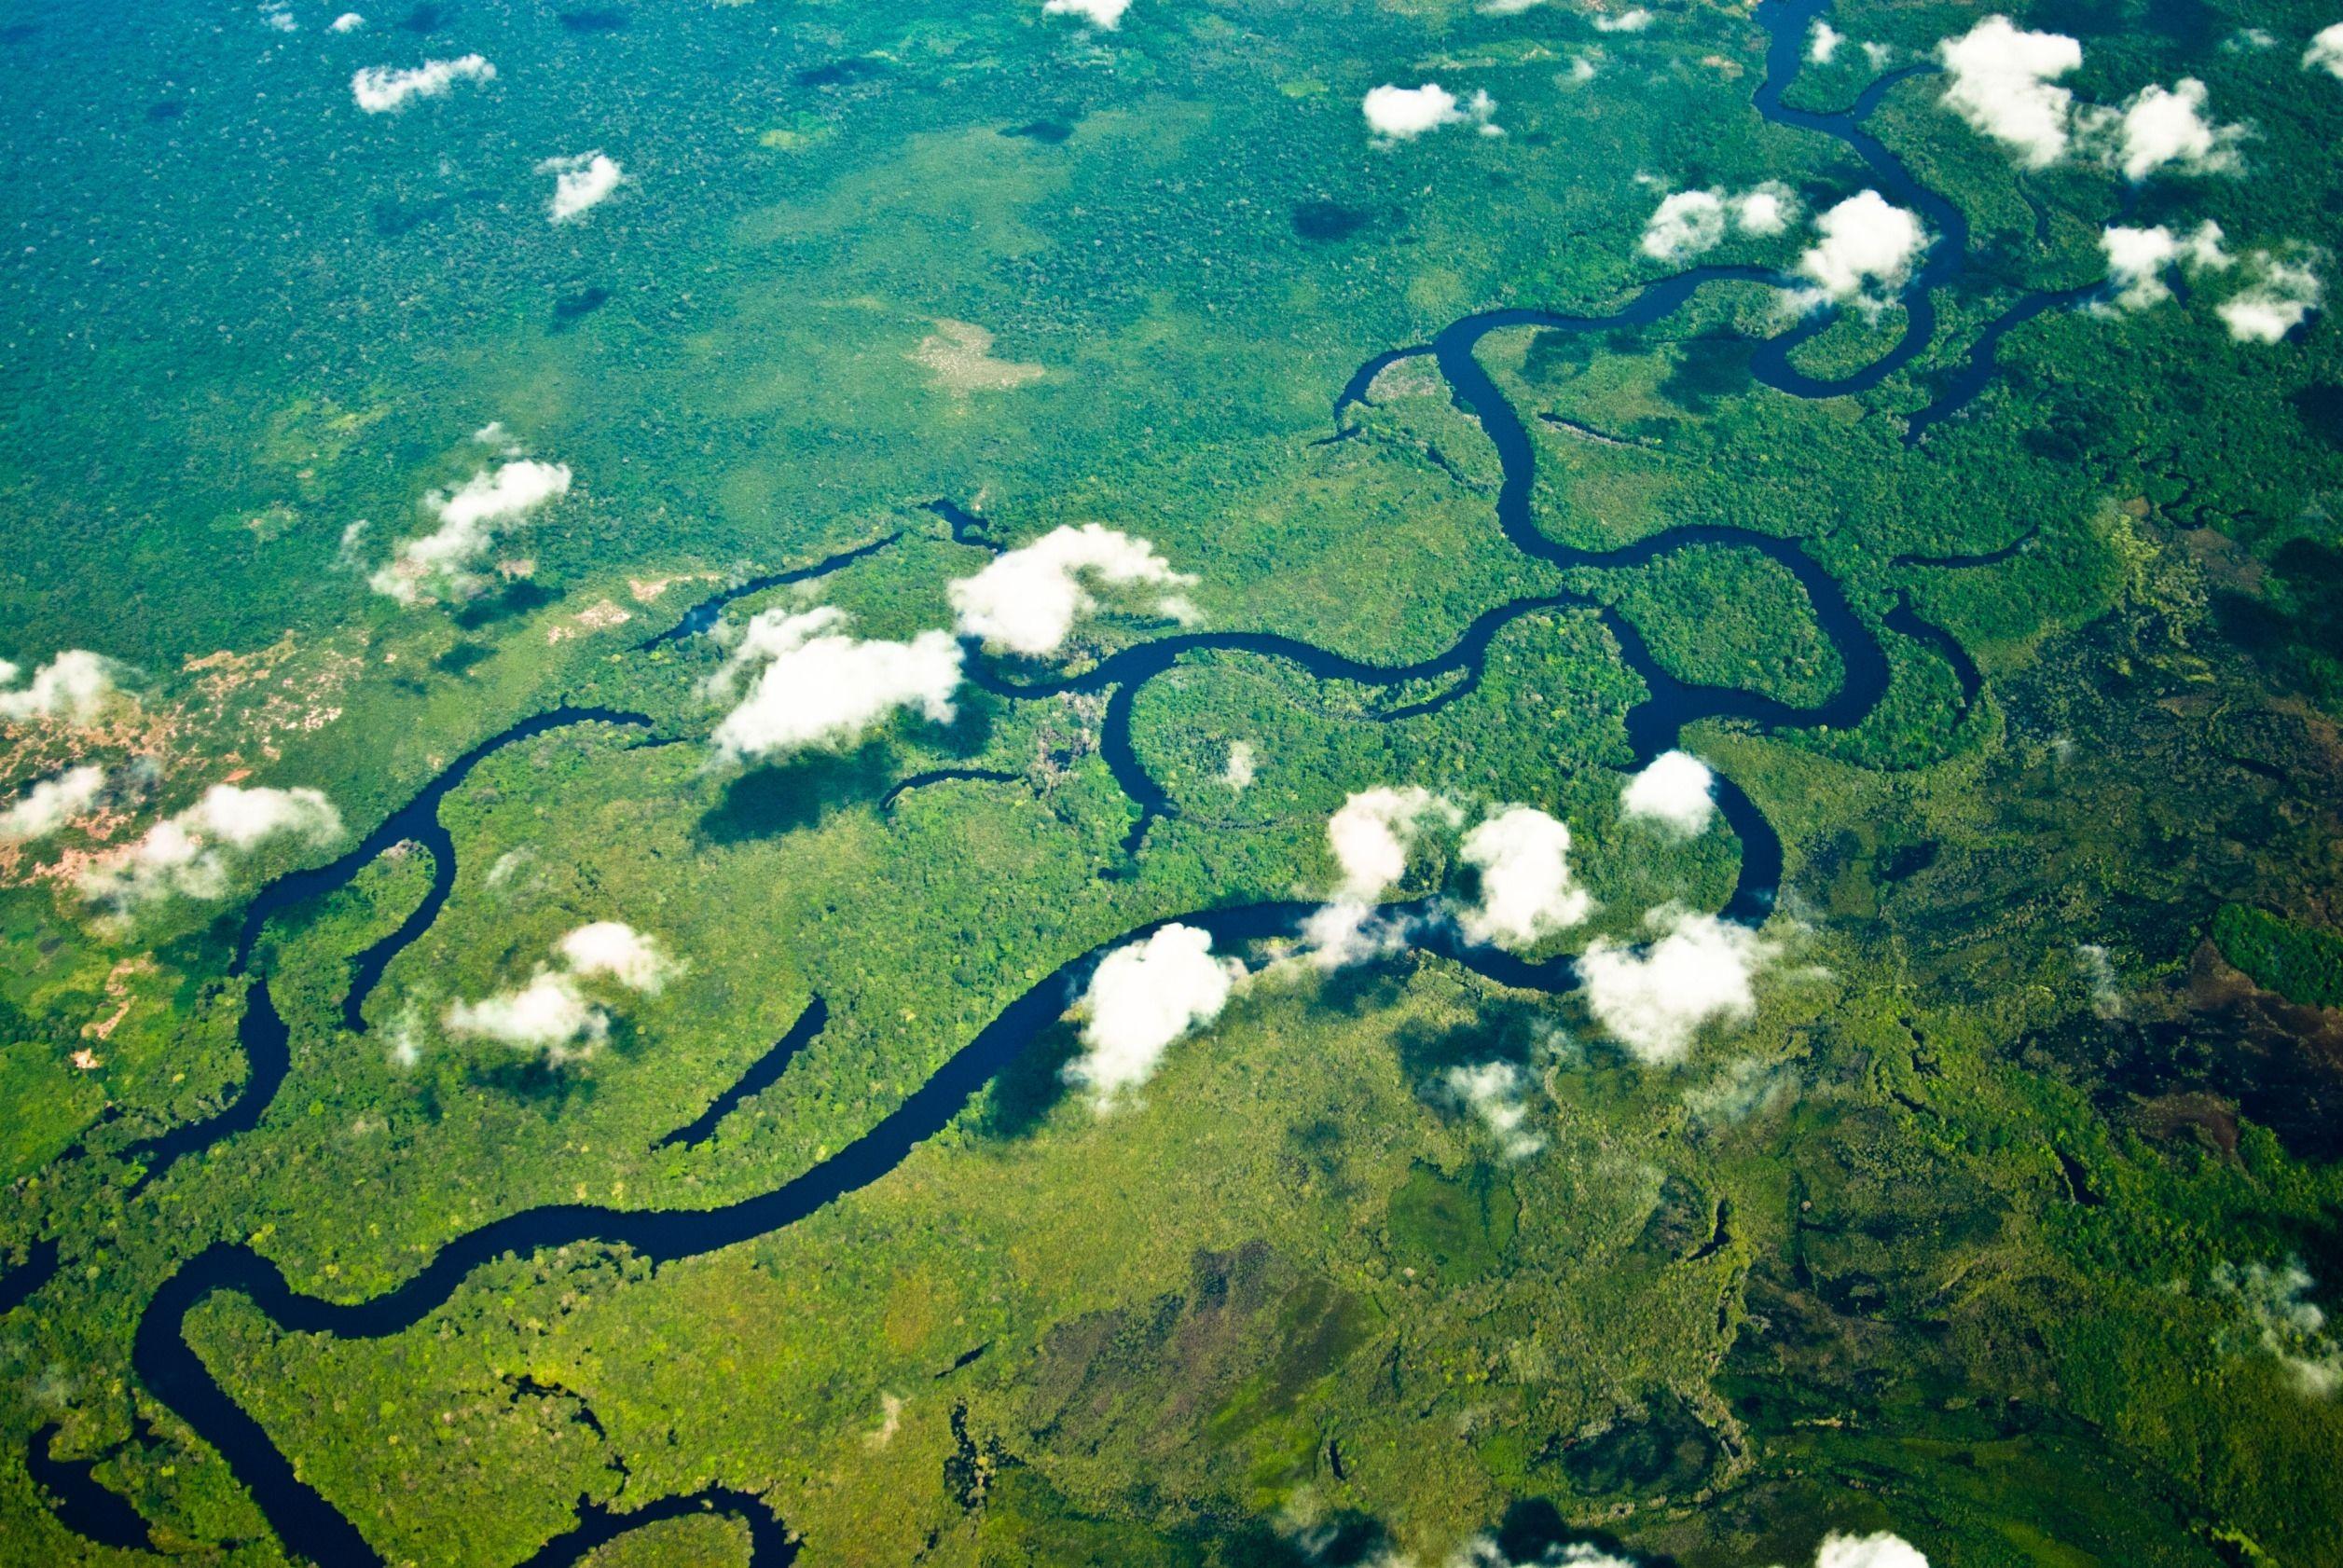 Реки на планете земля. Бразилия Амазонская низменность. Исток реки Амазонка. Устье реки Амазонка.